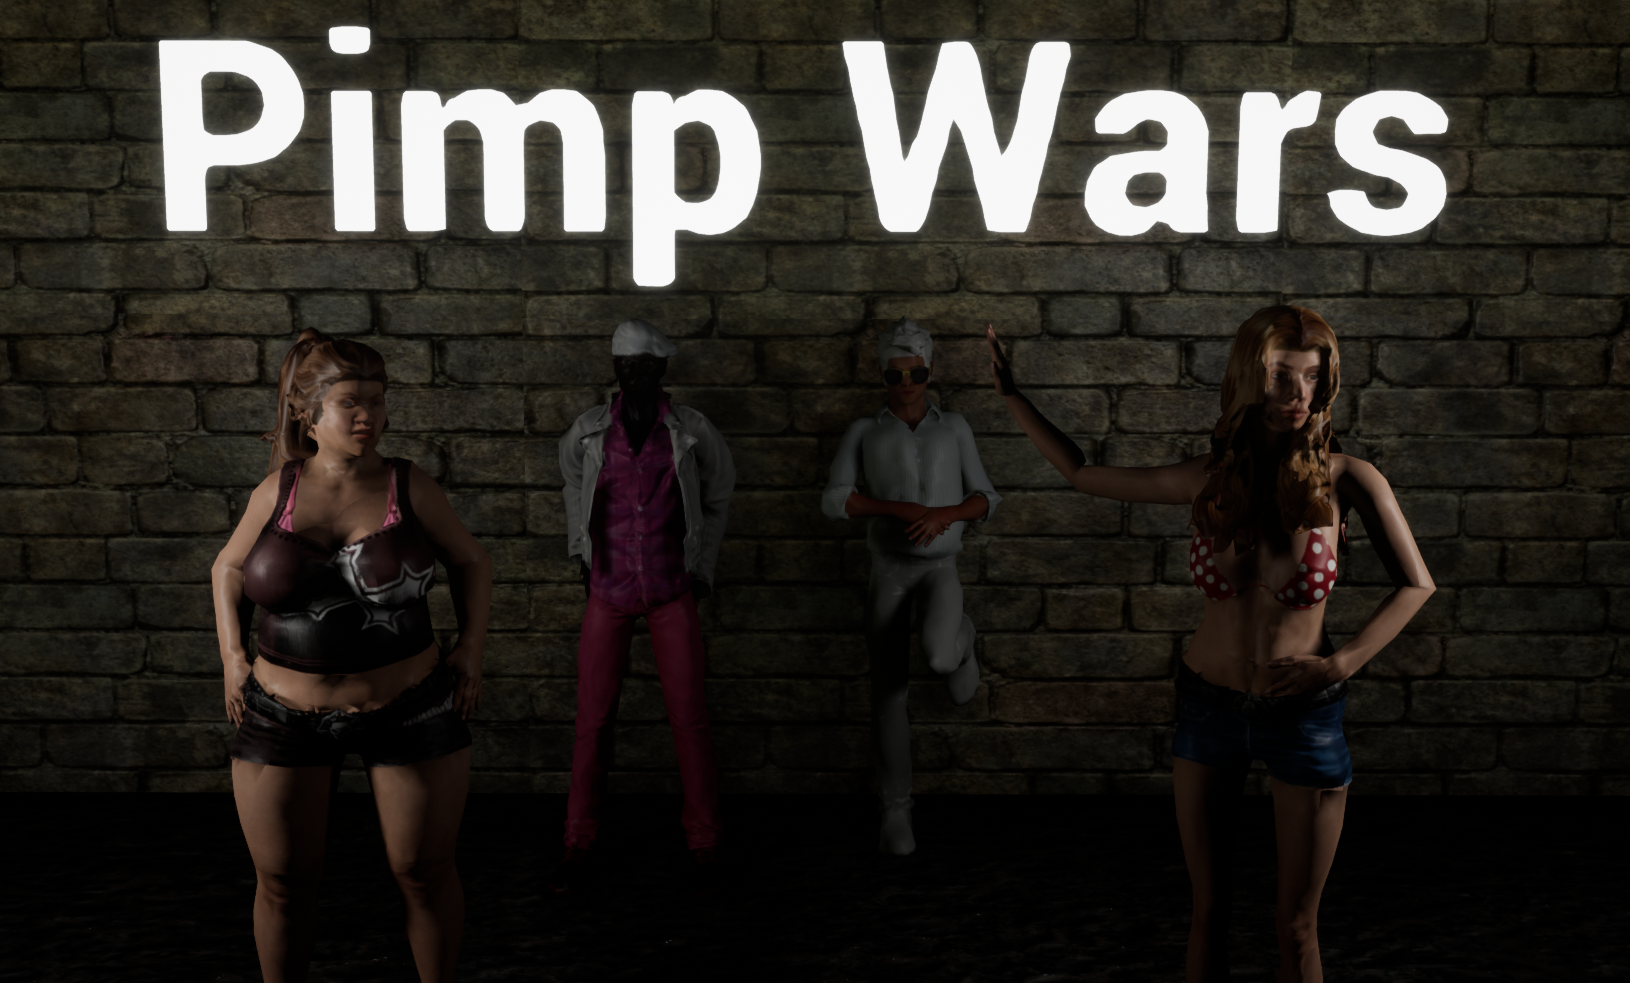 Pimp Wars